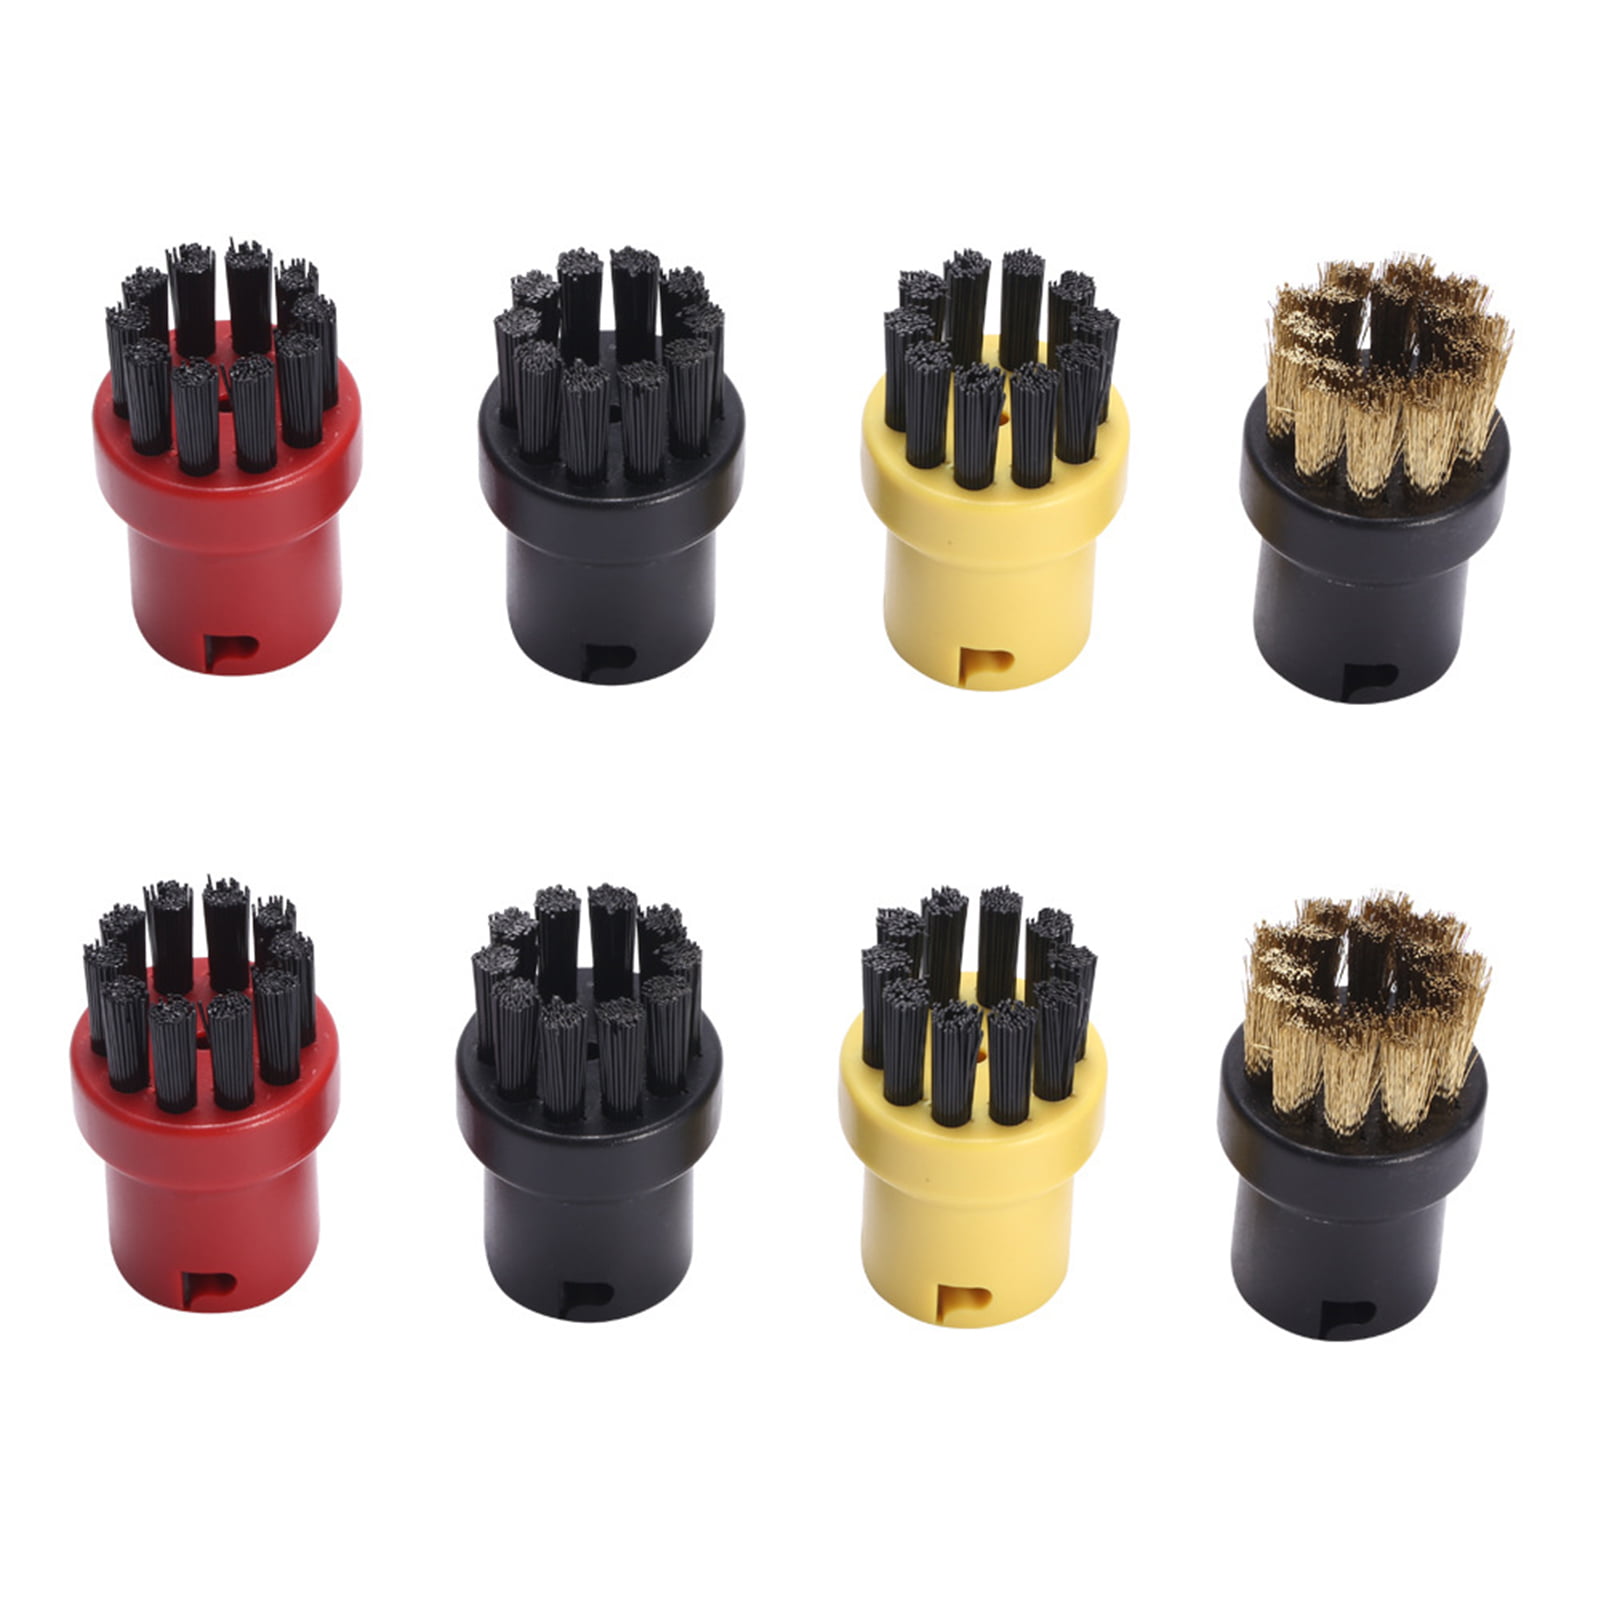 4pcs Round Brushes Nozzles Kits For Karcher SC2 SC3 SC4 SC5 Steam Cleaner Parts 